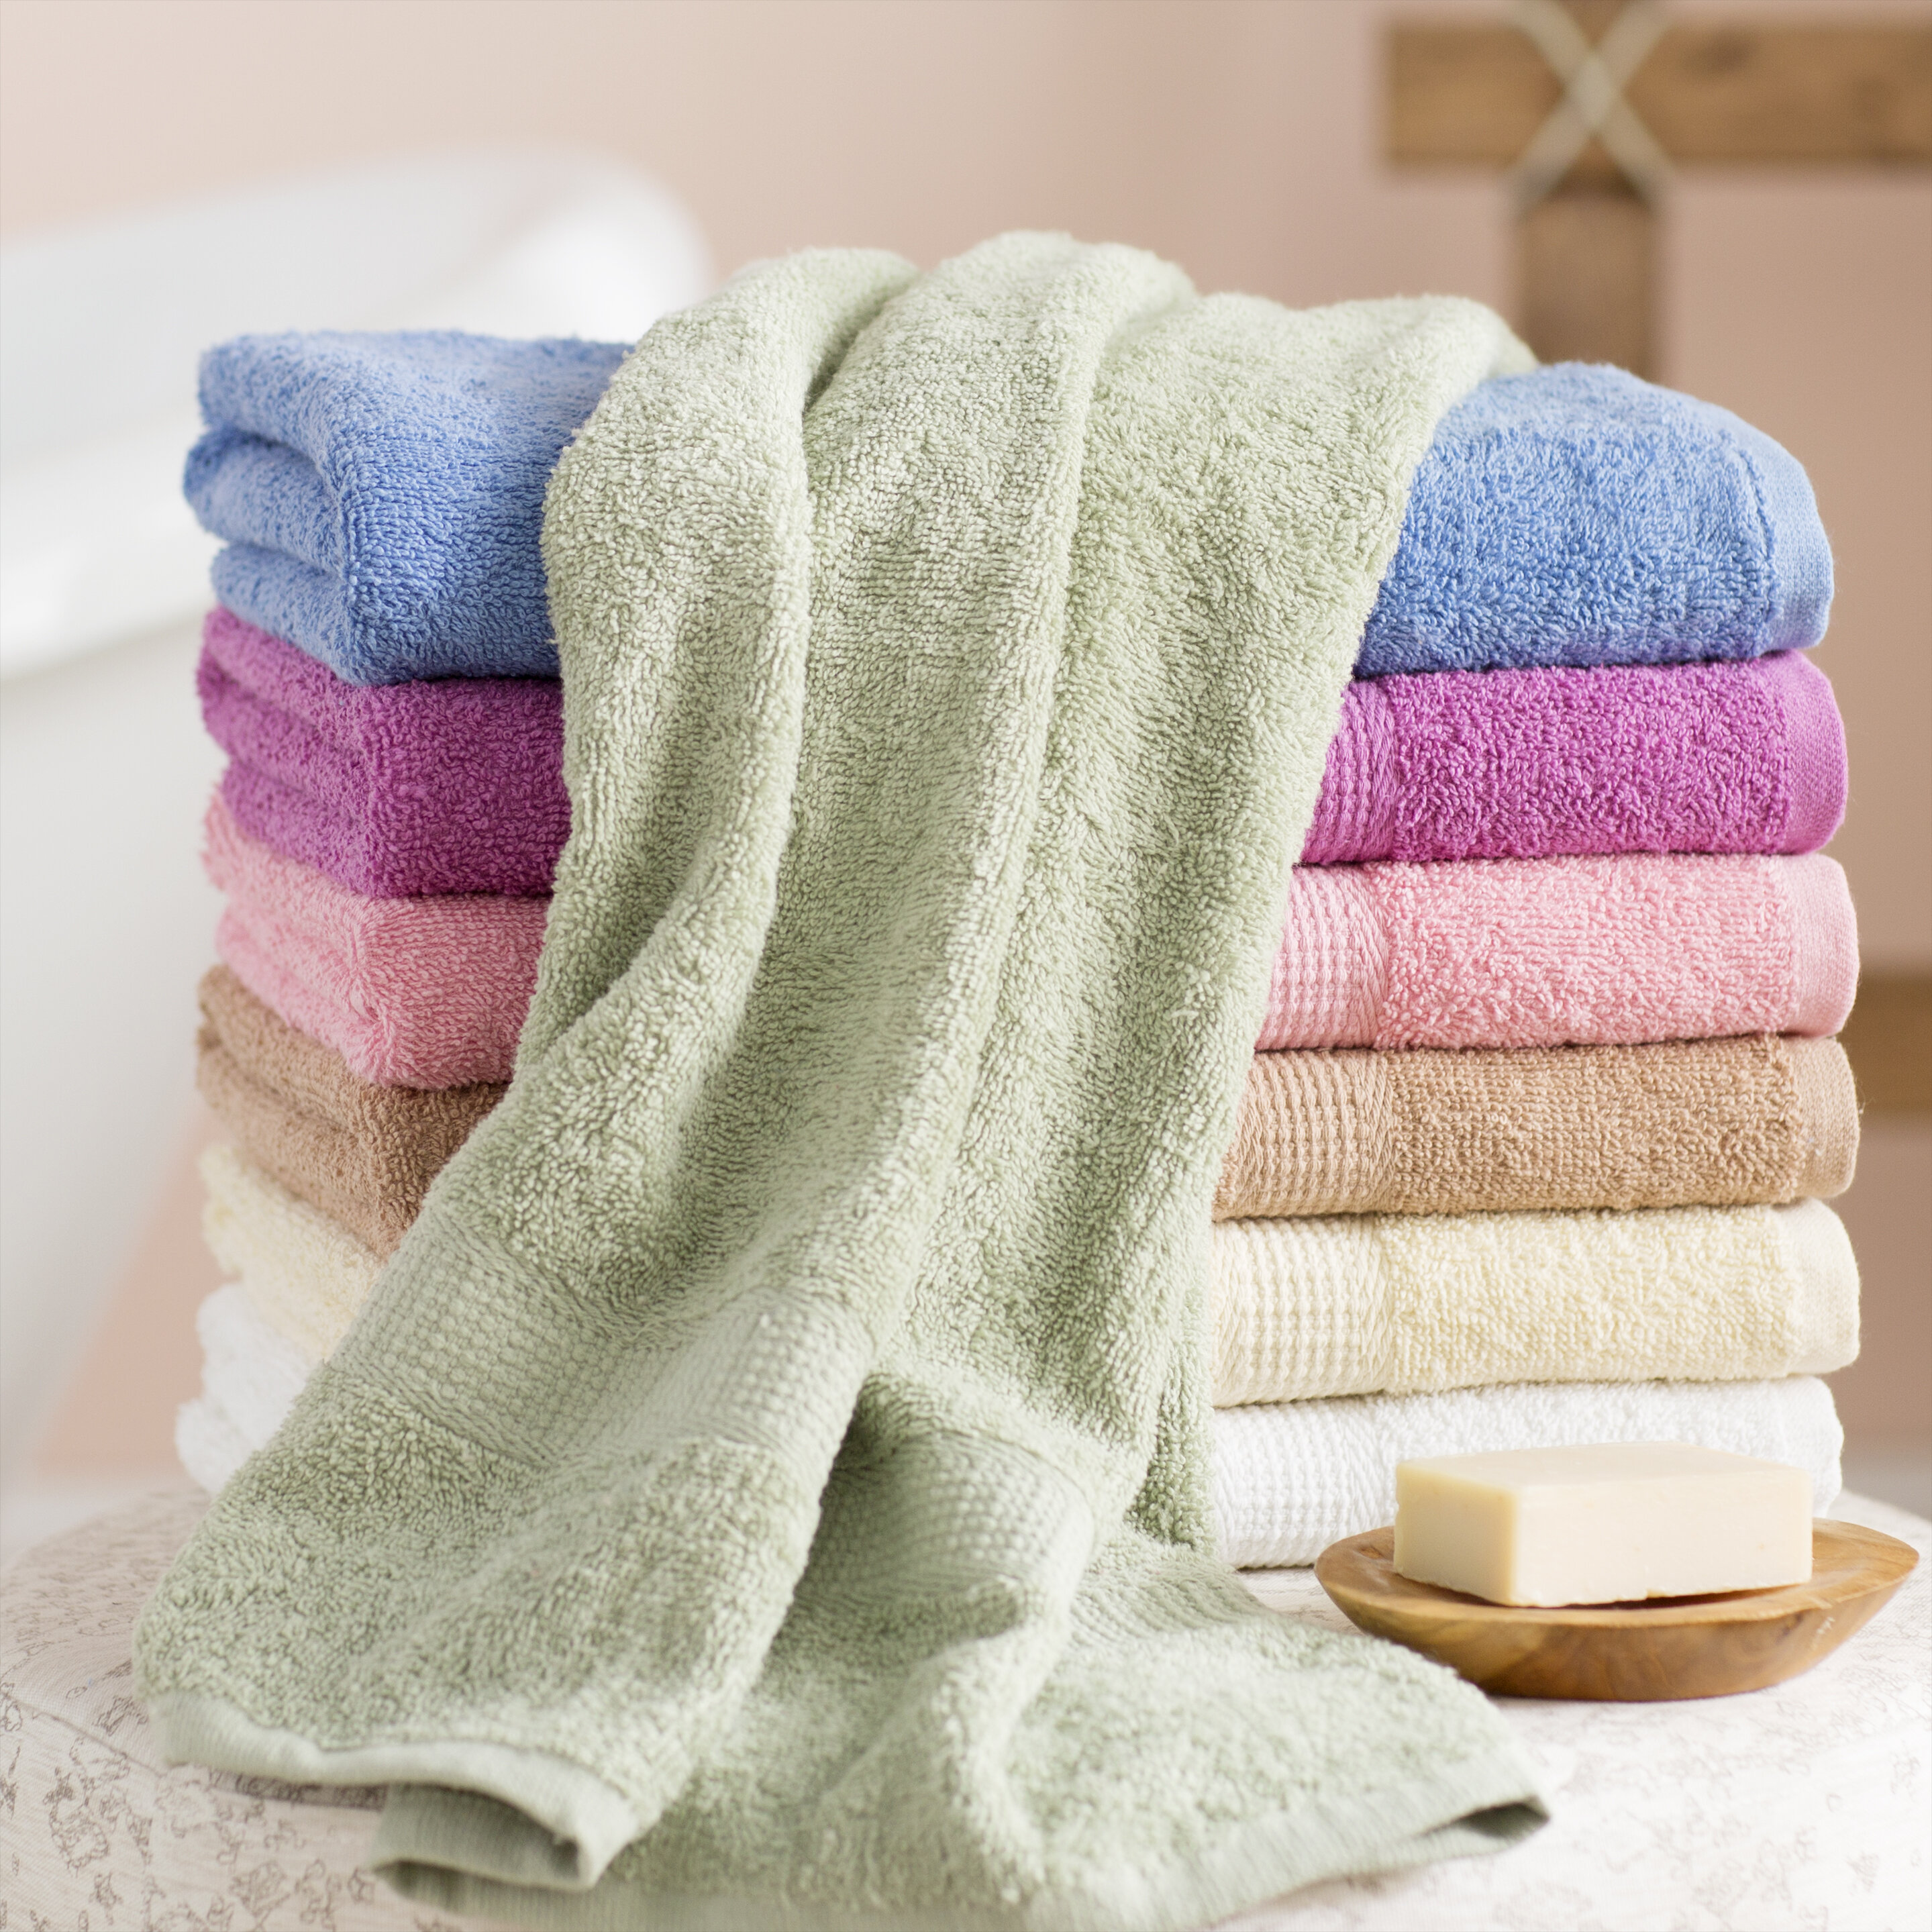 Ultra Soft 100% Cotton 4-Piece Bath Towel Set White